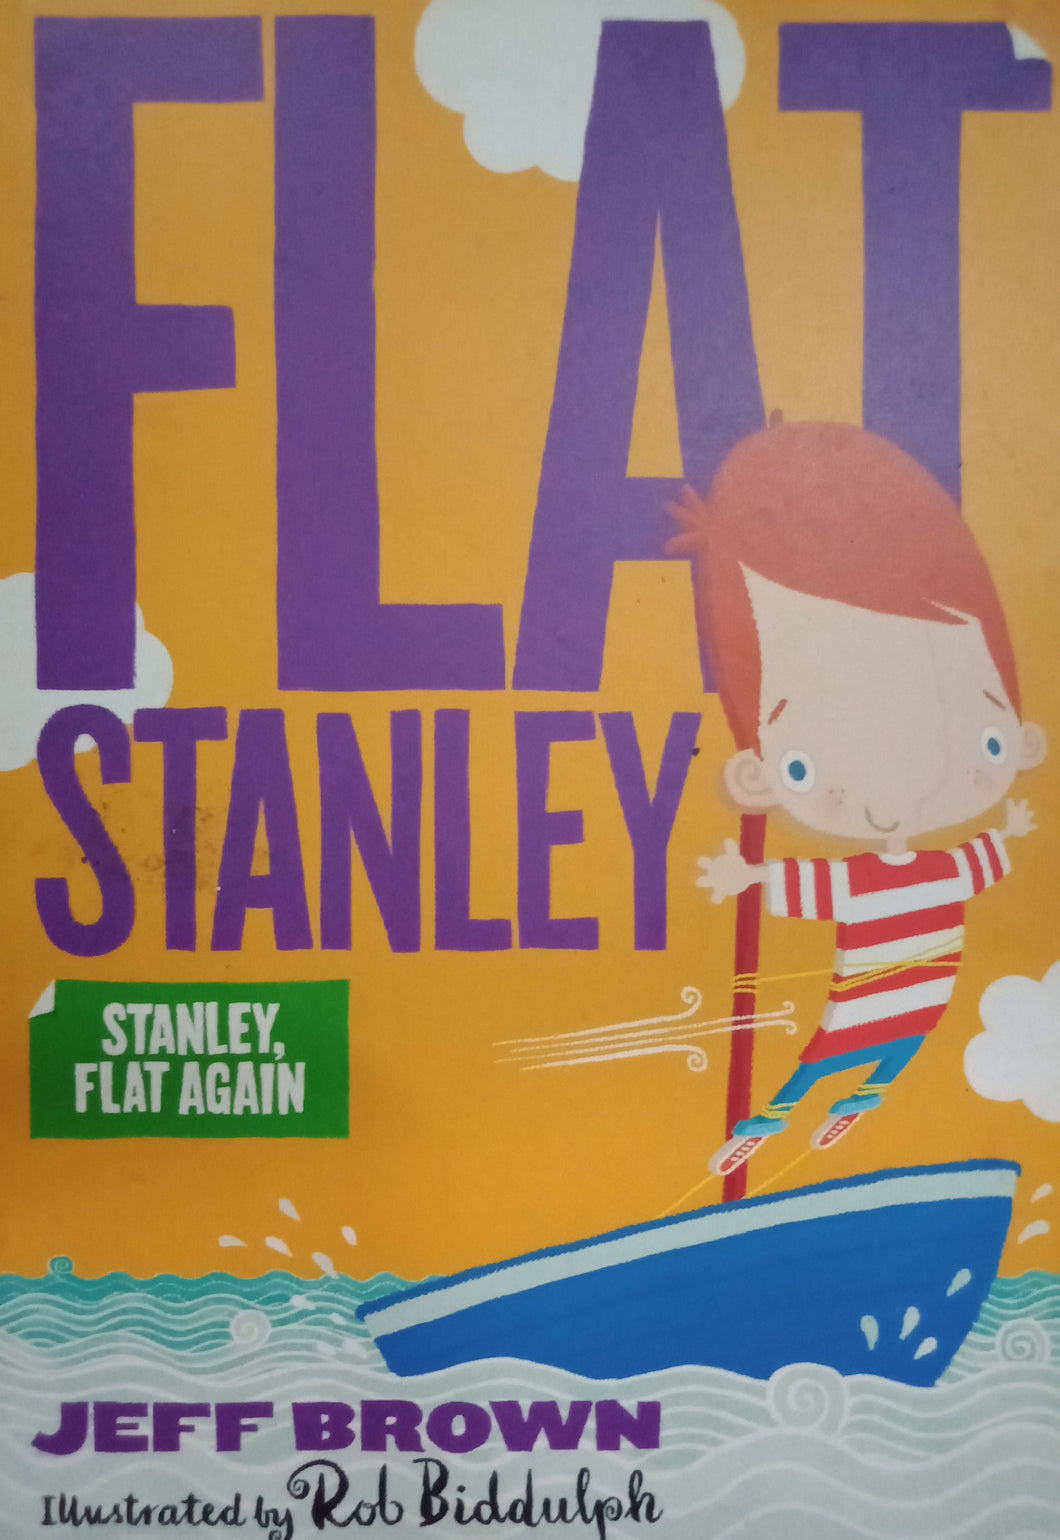 Flat Stanley: Stanley, Flat Again by Jeff Brown